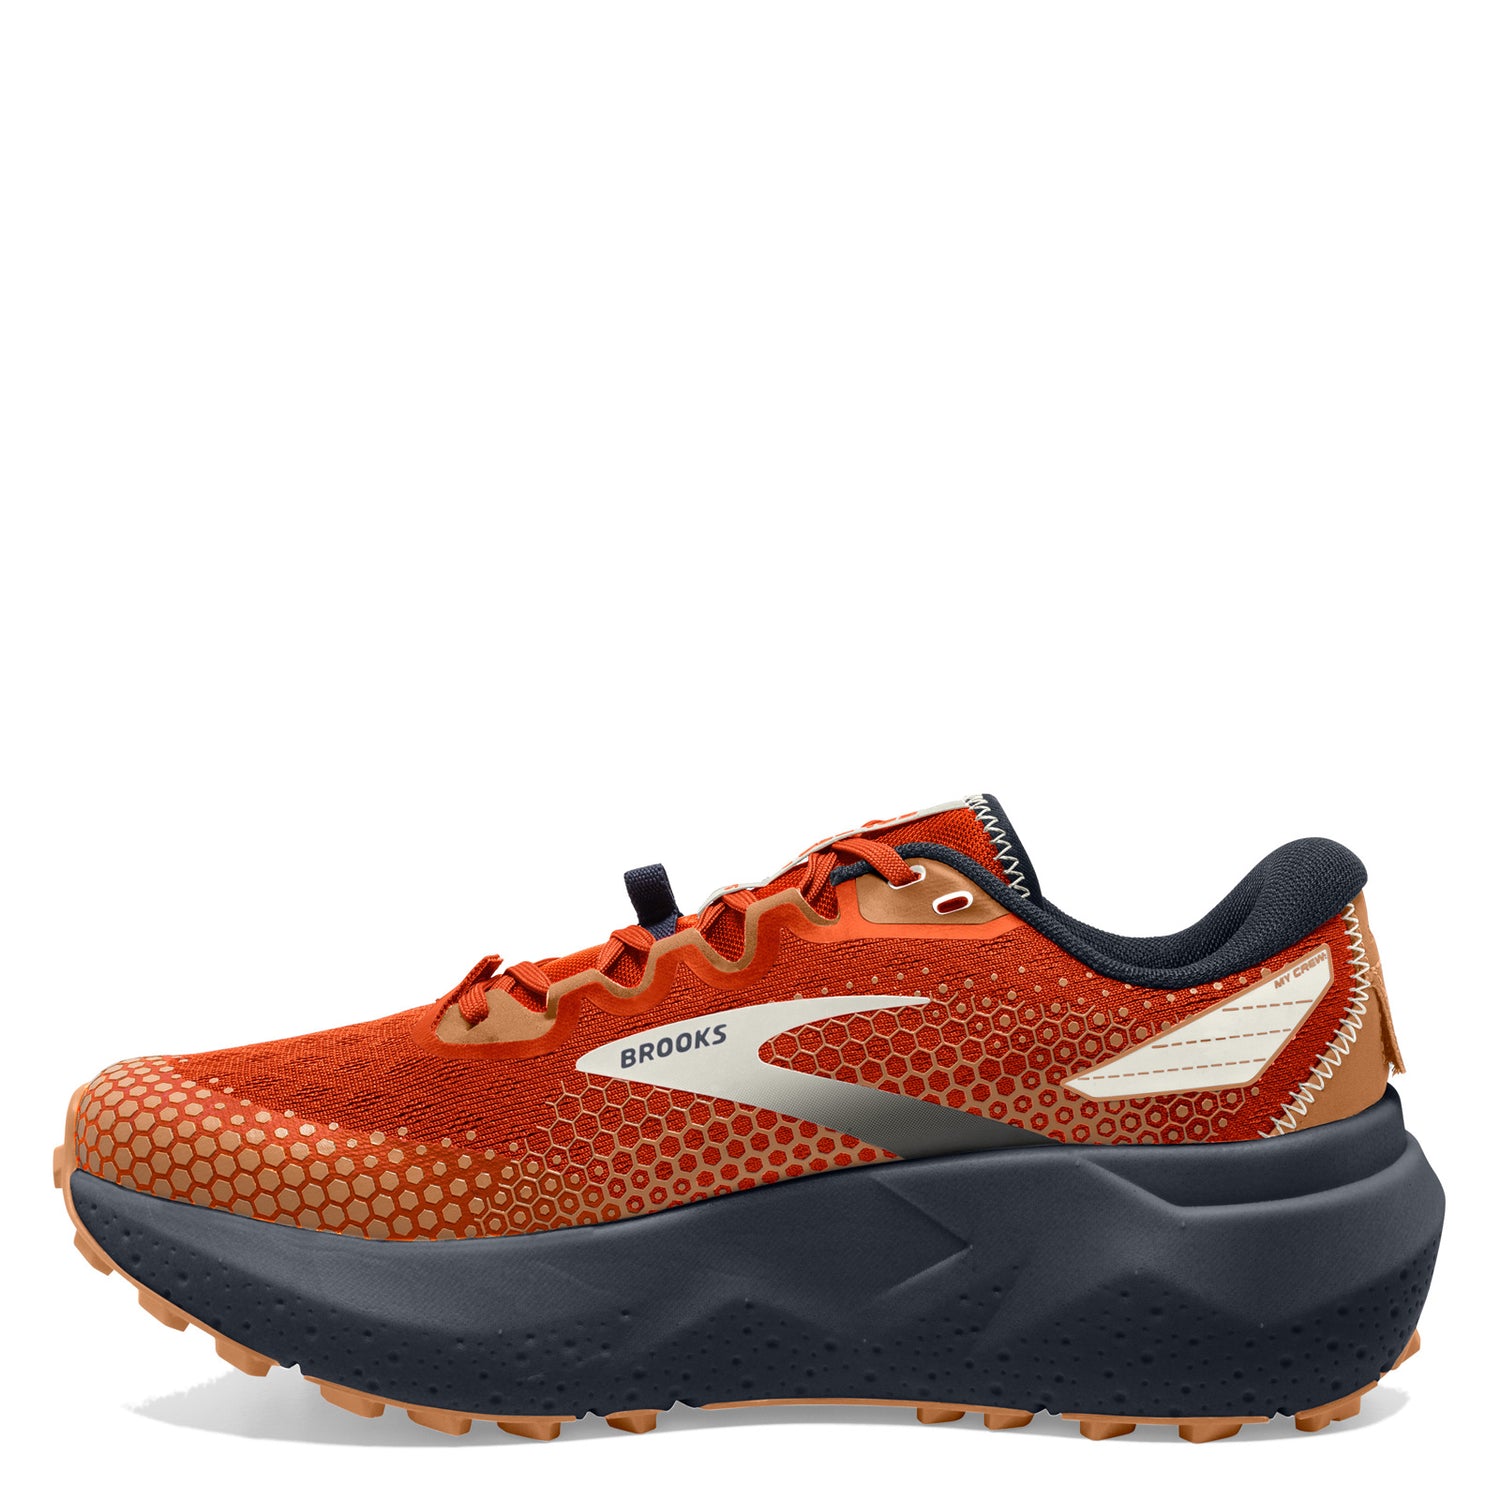 Peltz Shoes  Men's Brooks Caldera 6 Trail Running Shoe Peacoat/Atomic/Blue 110379 1D 269